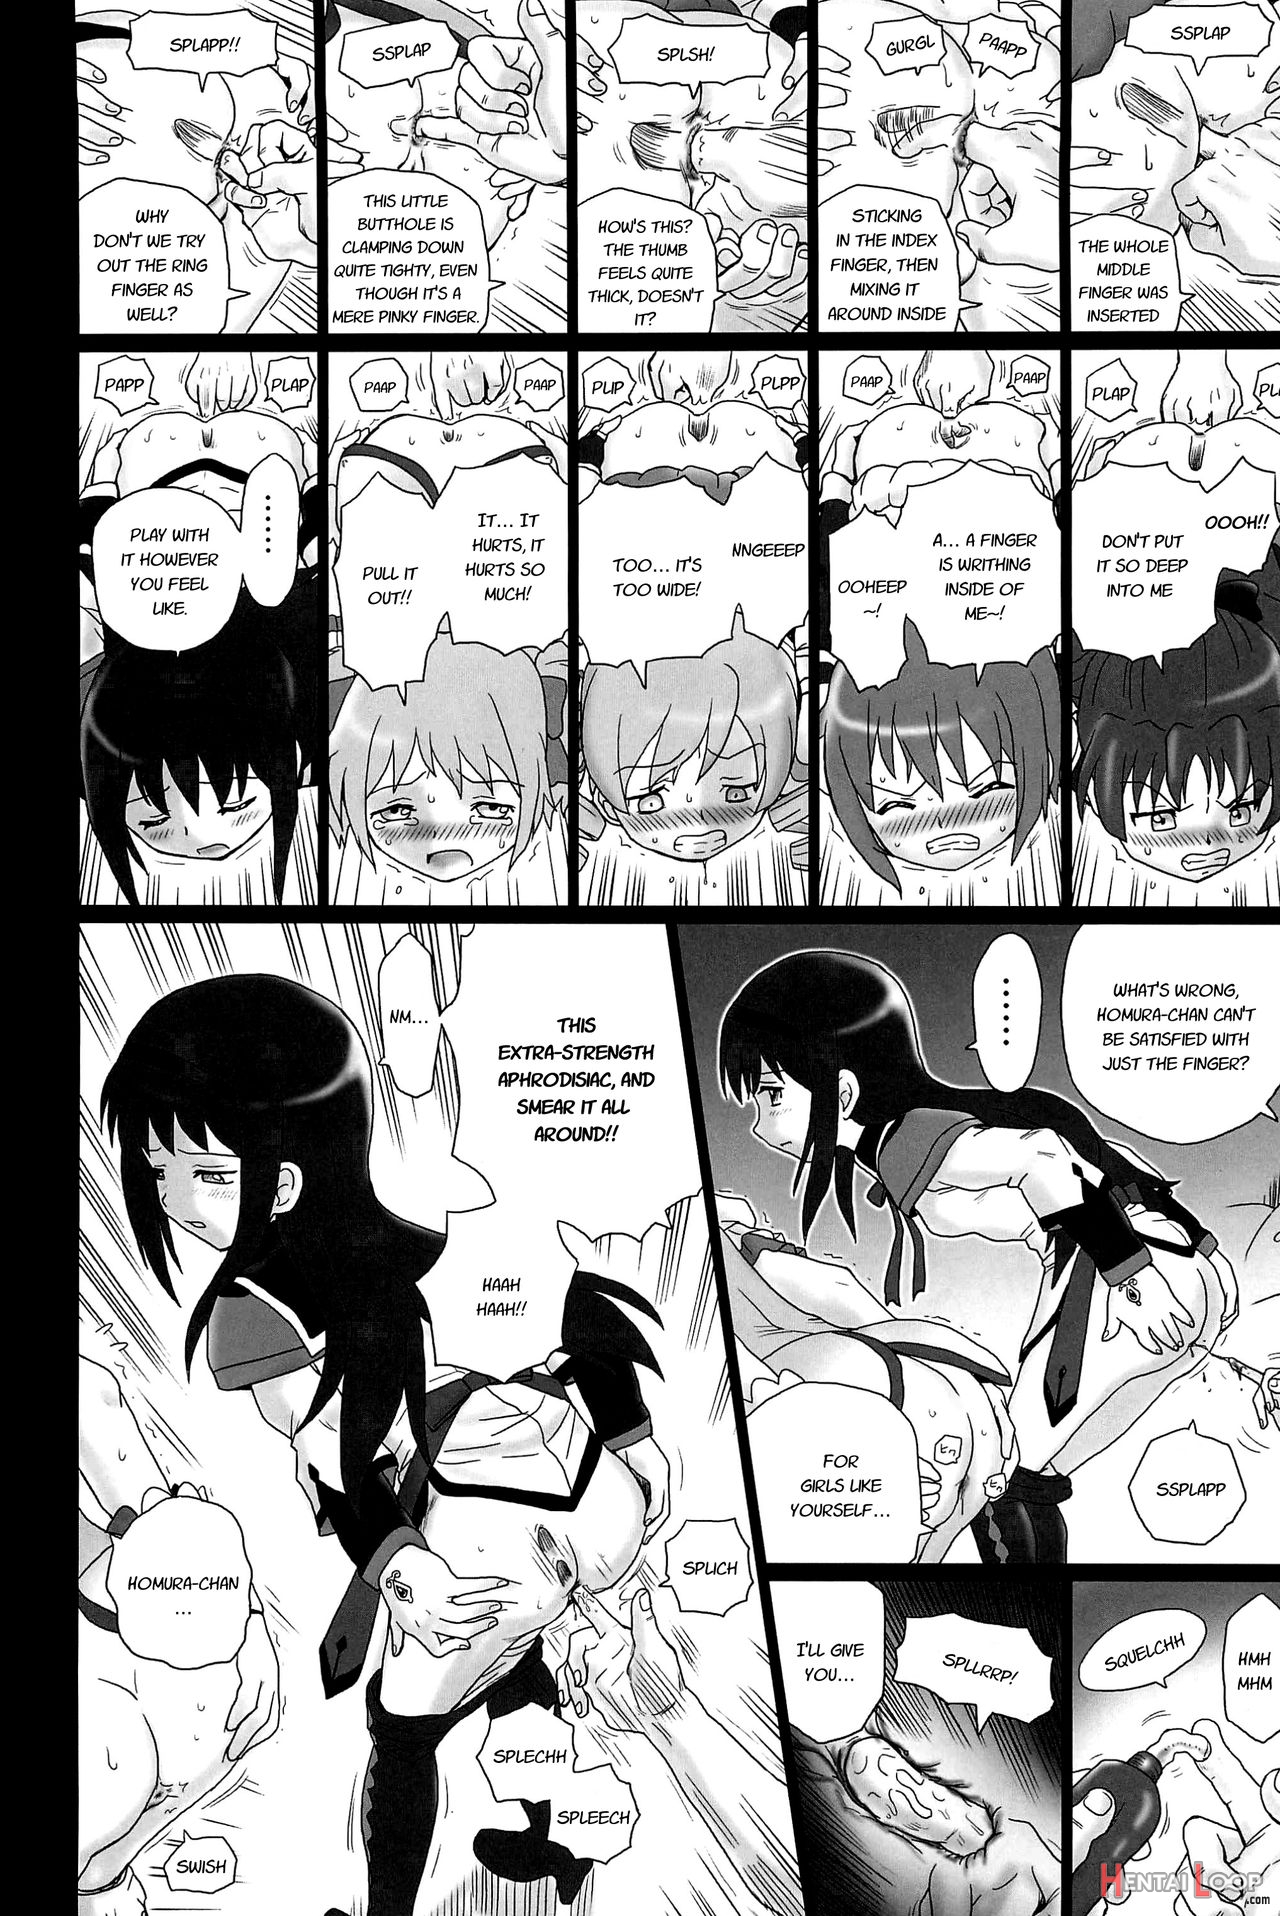 Tail-man Mado★magi 5girls Book page 7